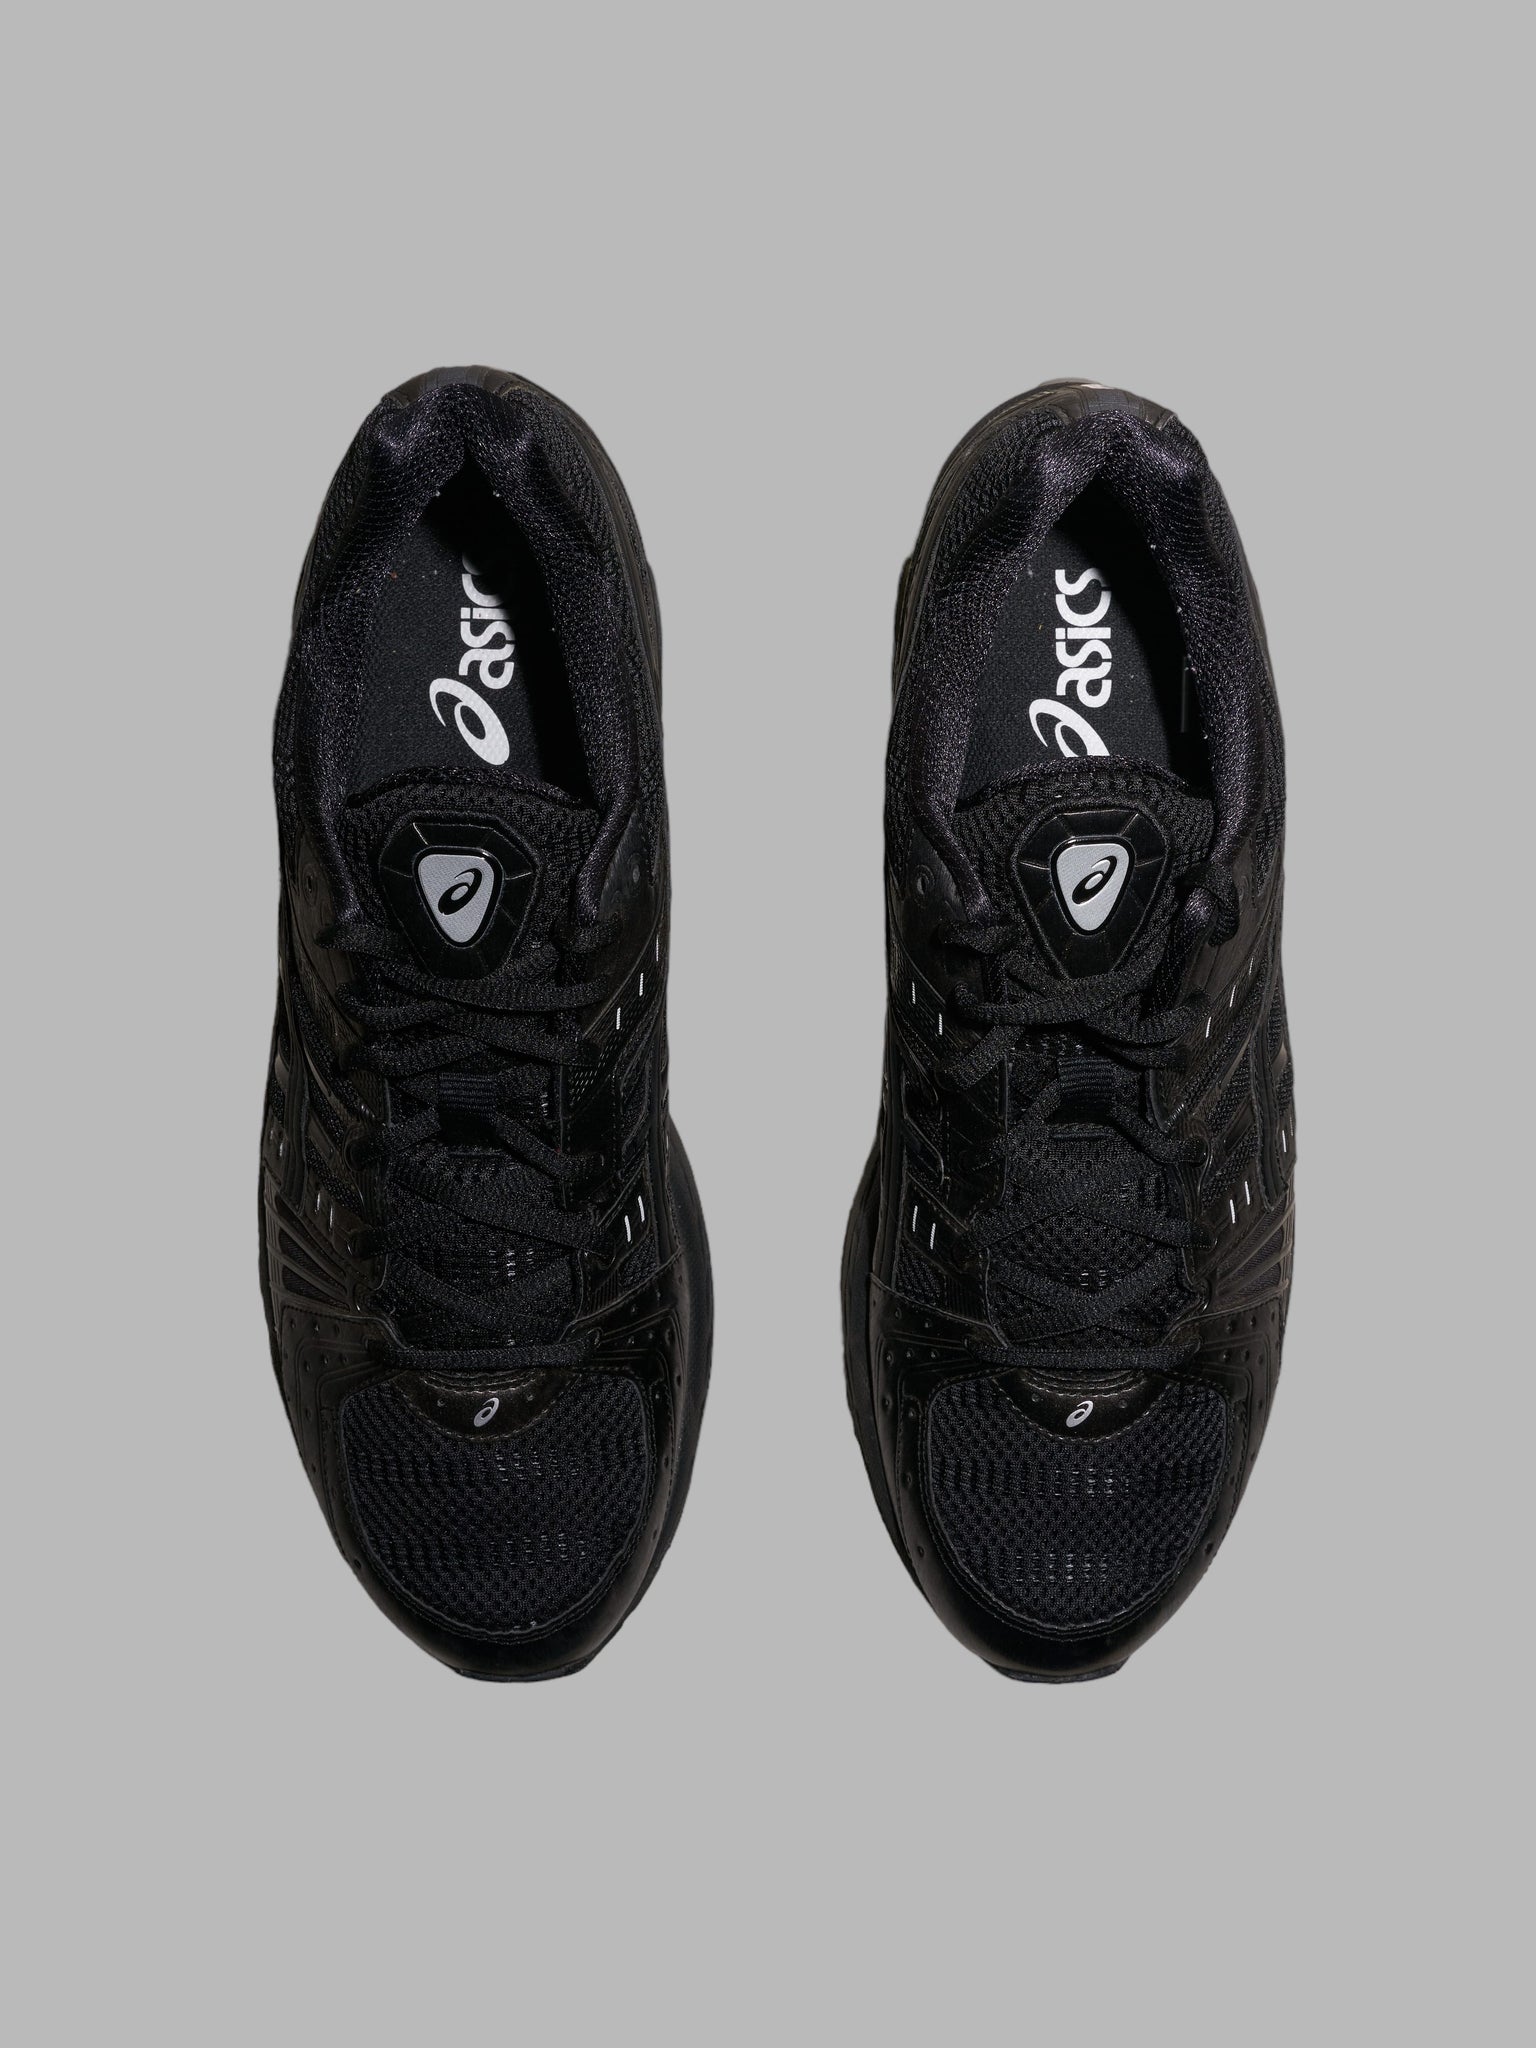 Asics Gel-Kinsei OG Black/Black sneakers - US mens size 12.5 EU 47